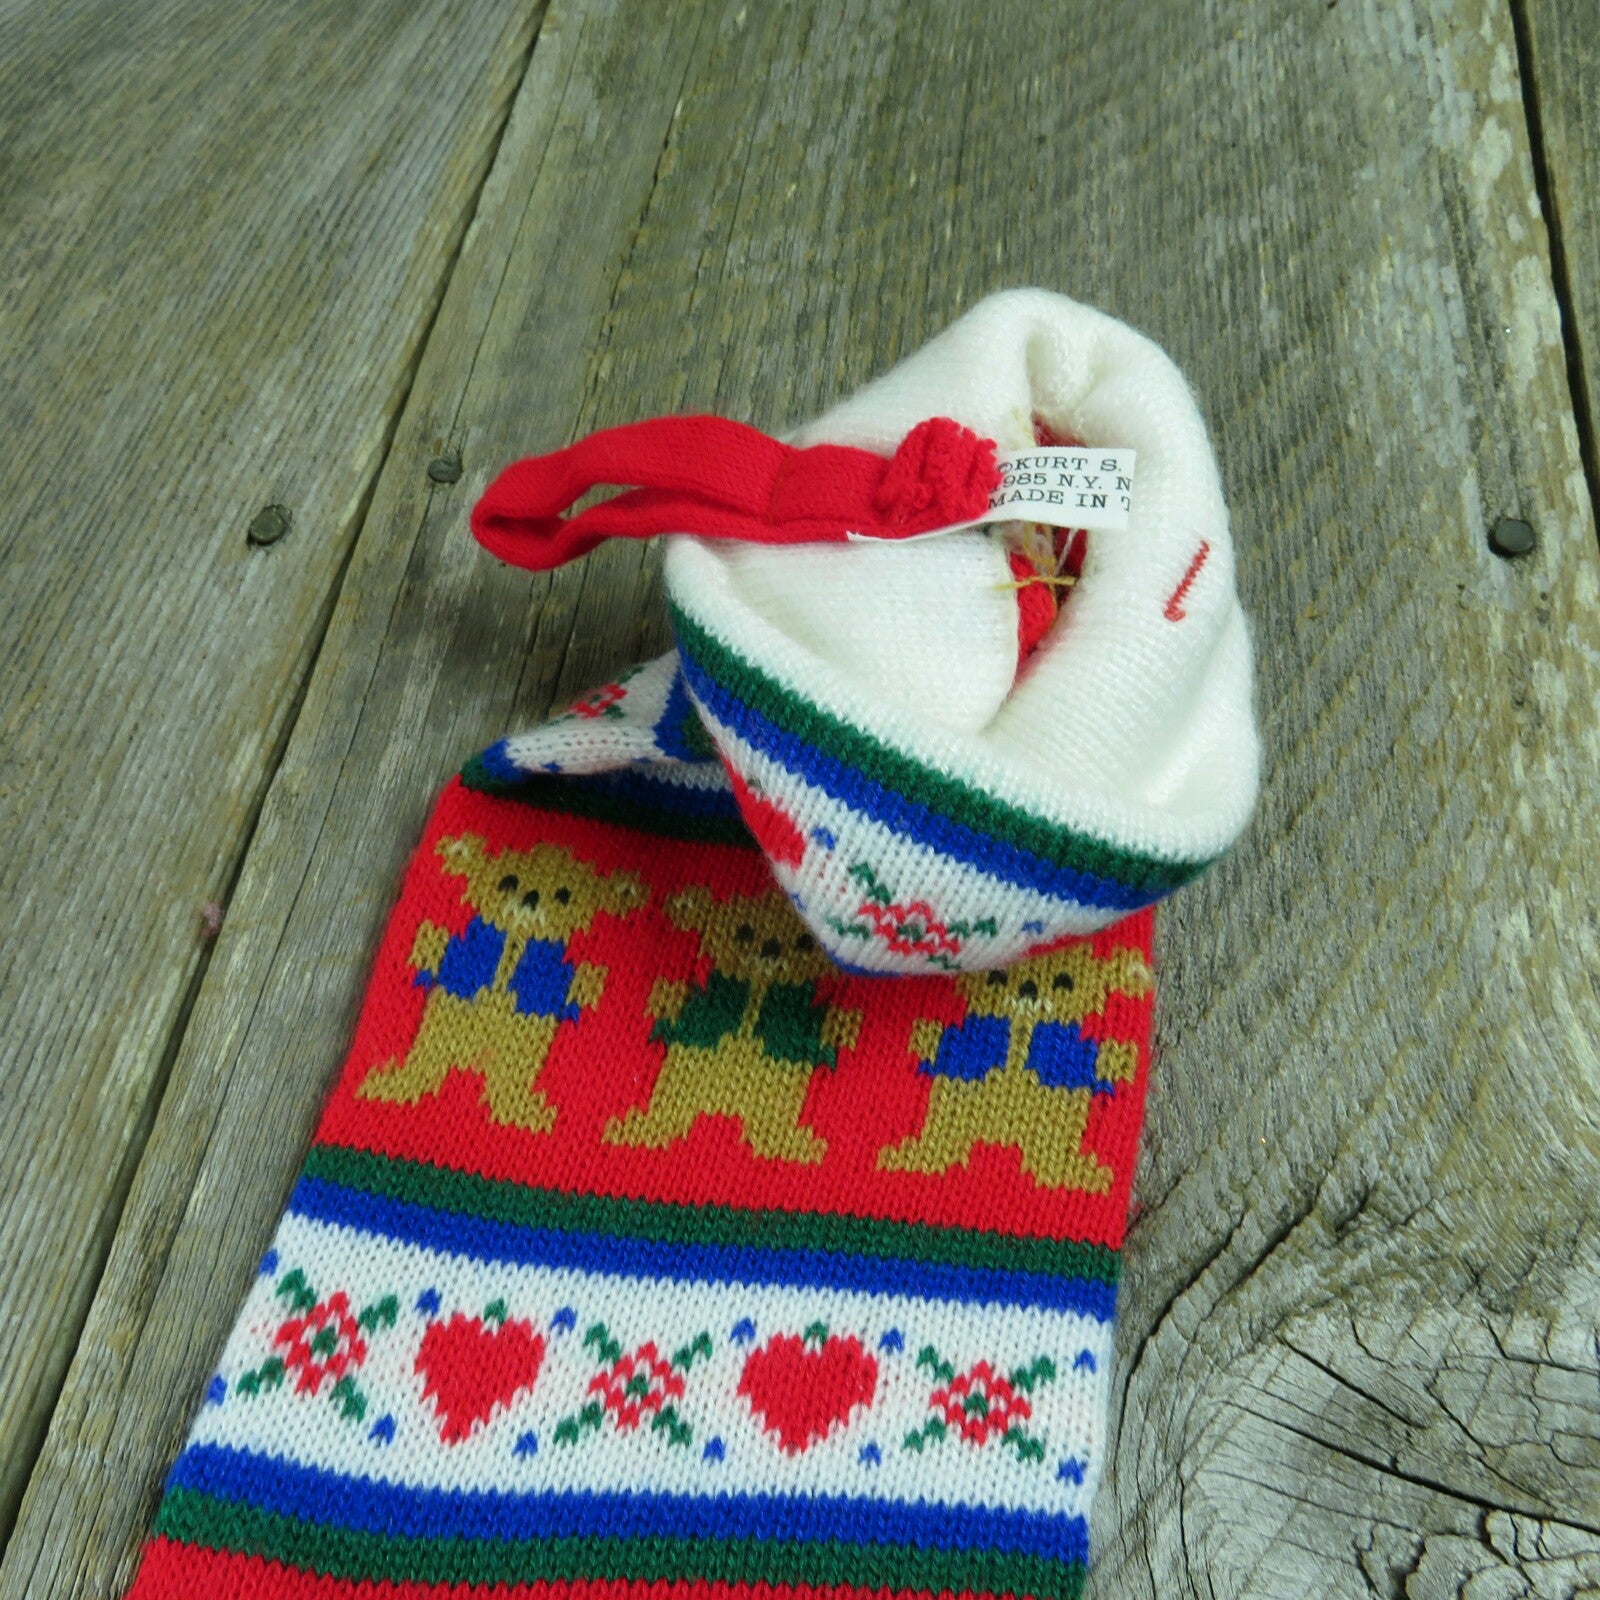 Vintage Knit Teddy Bear Stocking Kurt Adler Christmas Red White Hearts Striped Holiday Decor 1980s - At Grandma's Table